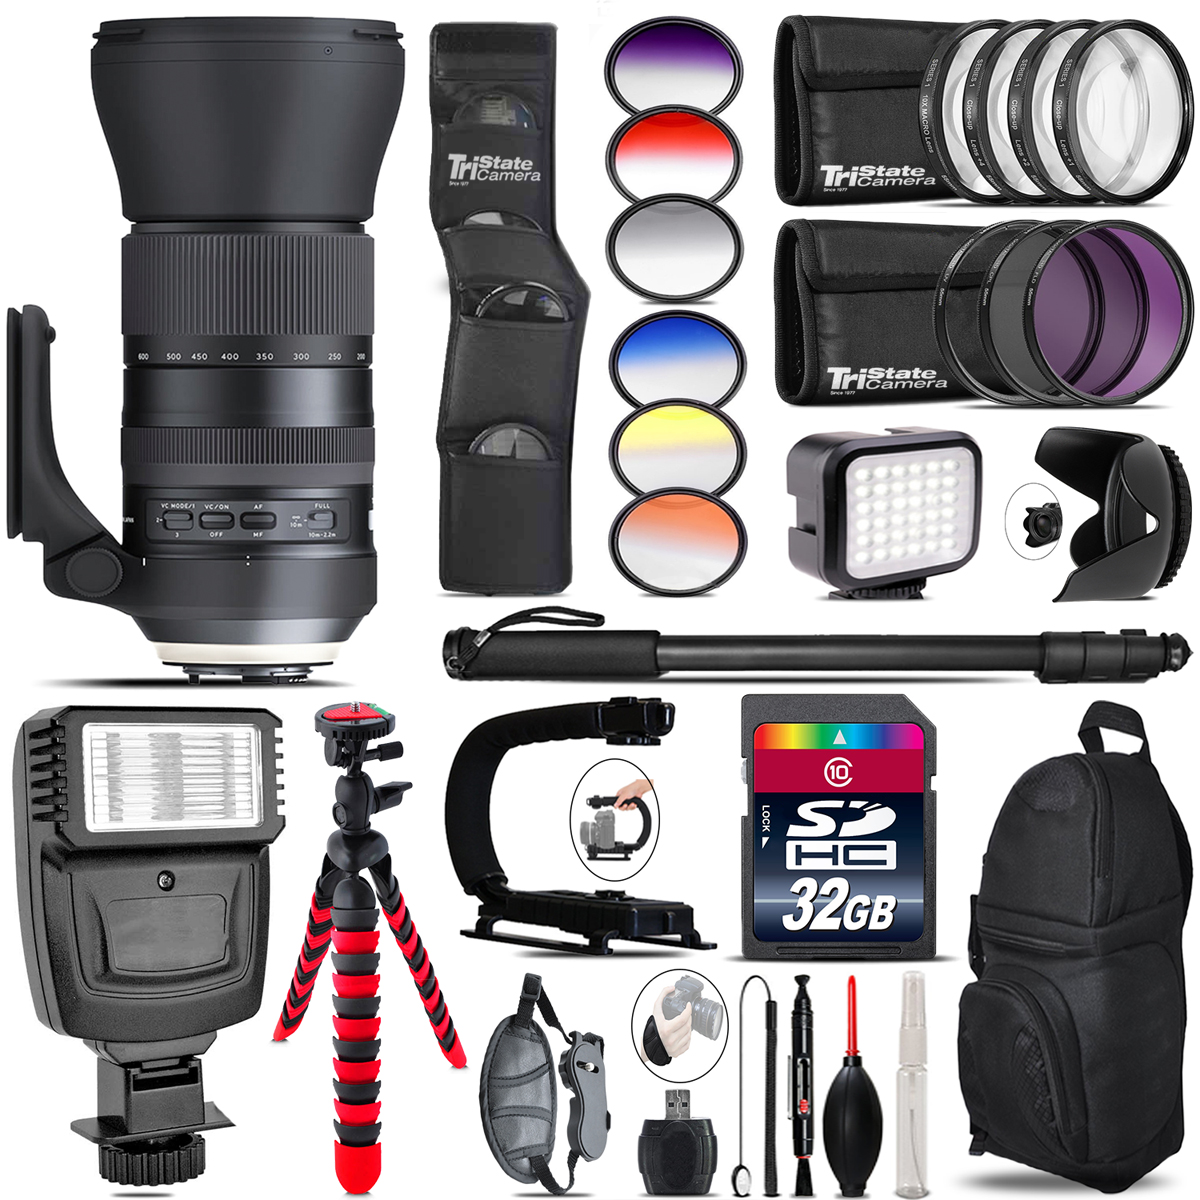 150-600mm G2 for Nikon + Color Set + LED Light - 32GB Accessory Bundle *FREE SHIPPING*